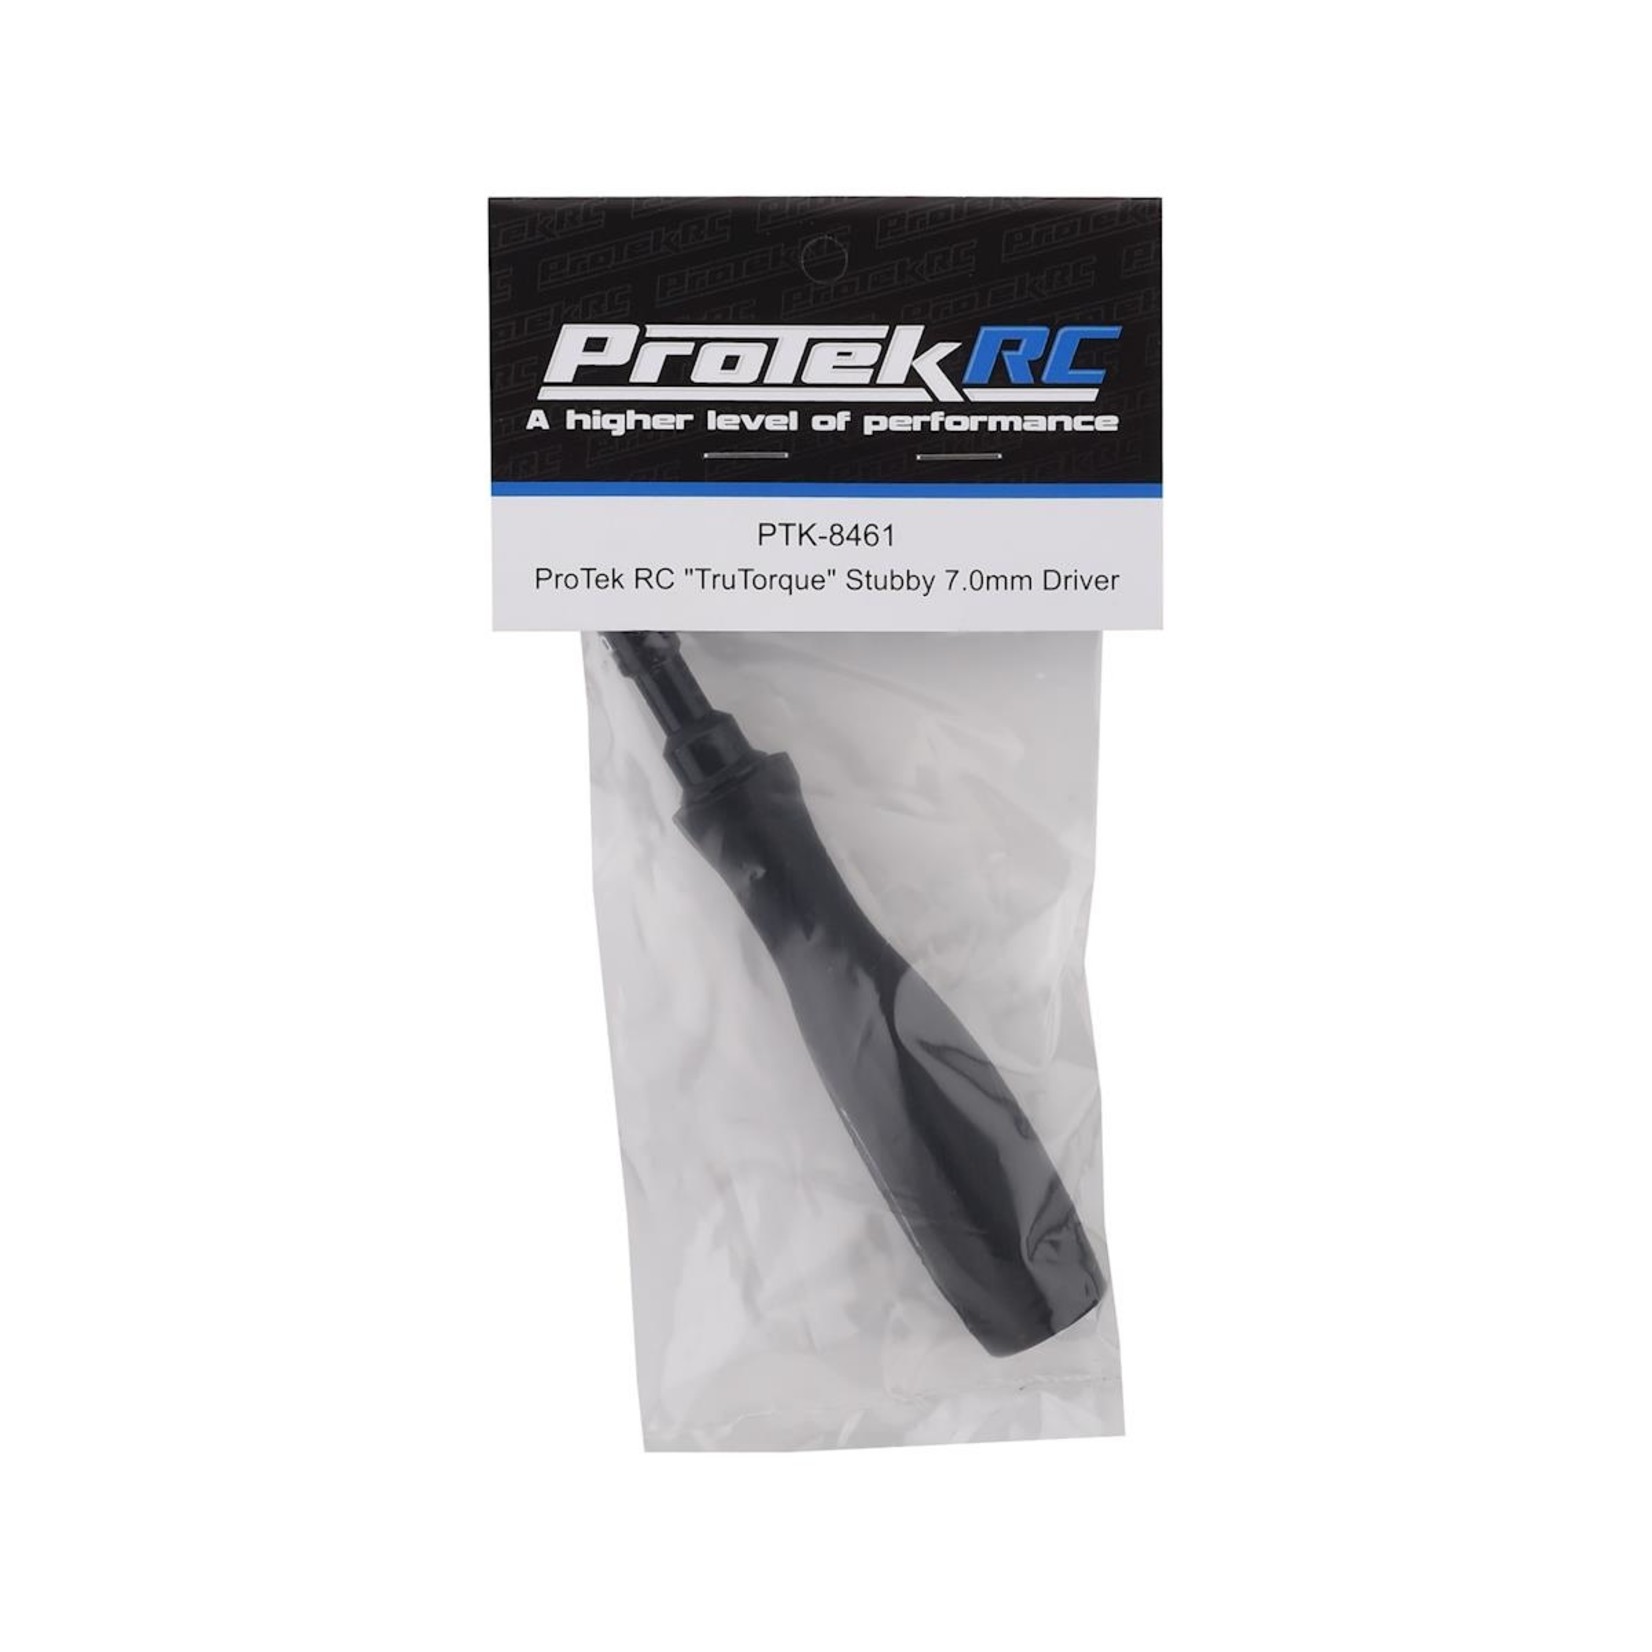 Protek R/C ProTek RC "TruTorque Stubby" Metric Nut Driver (7.0mm)